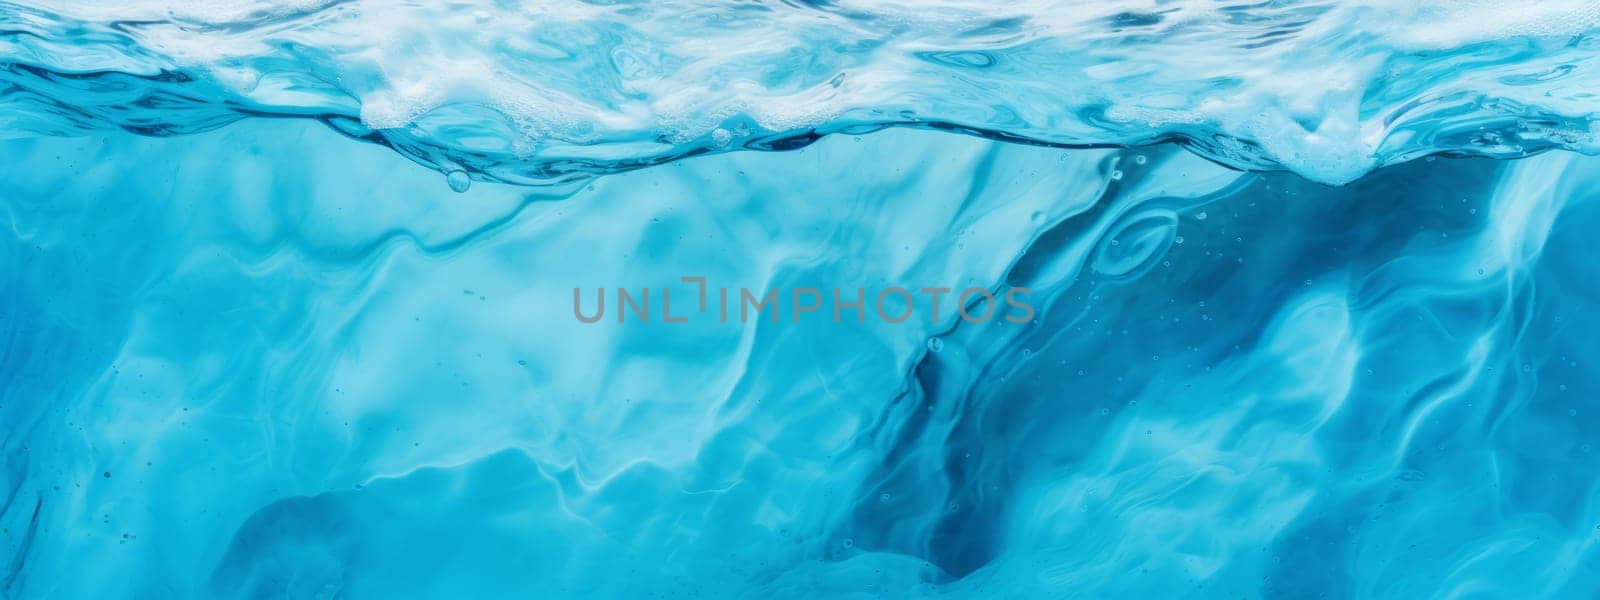 Underwater empty ocean or sea texture seamles background. by Artsiom